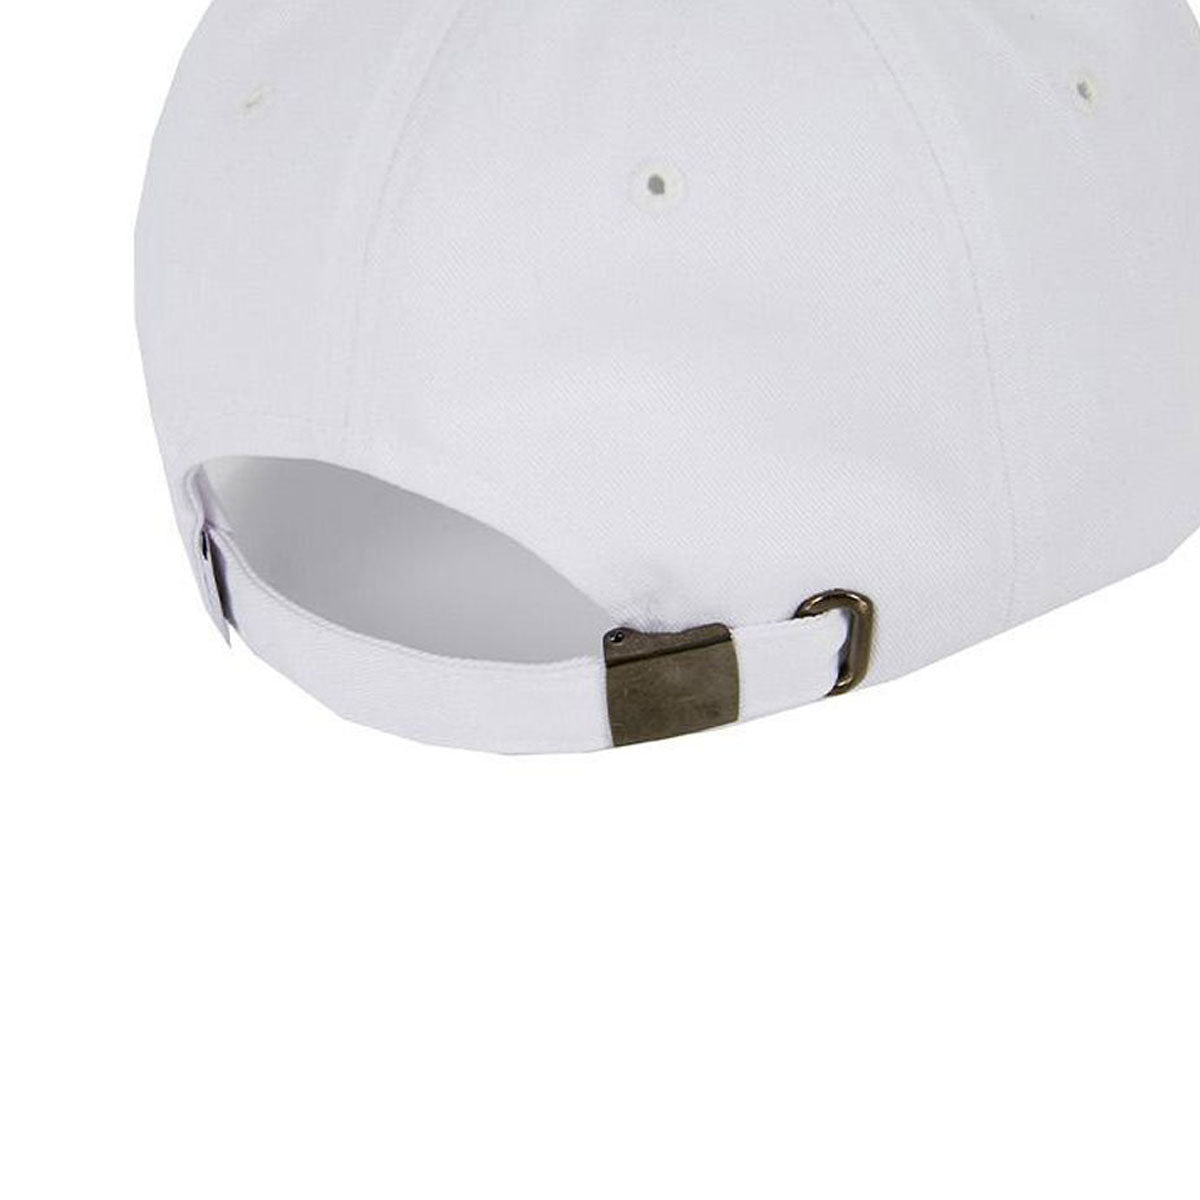 VARZAR - STUD LOGO OVER FIT BALL CAP WHITE [VZR4-0004]